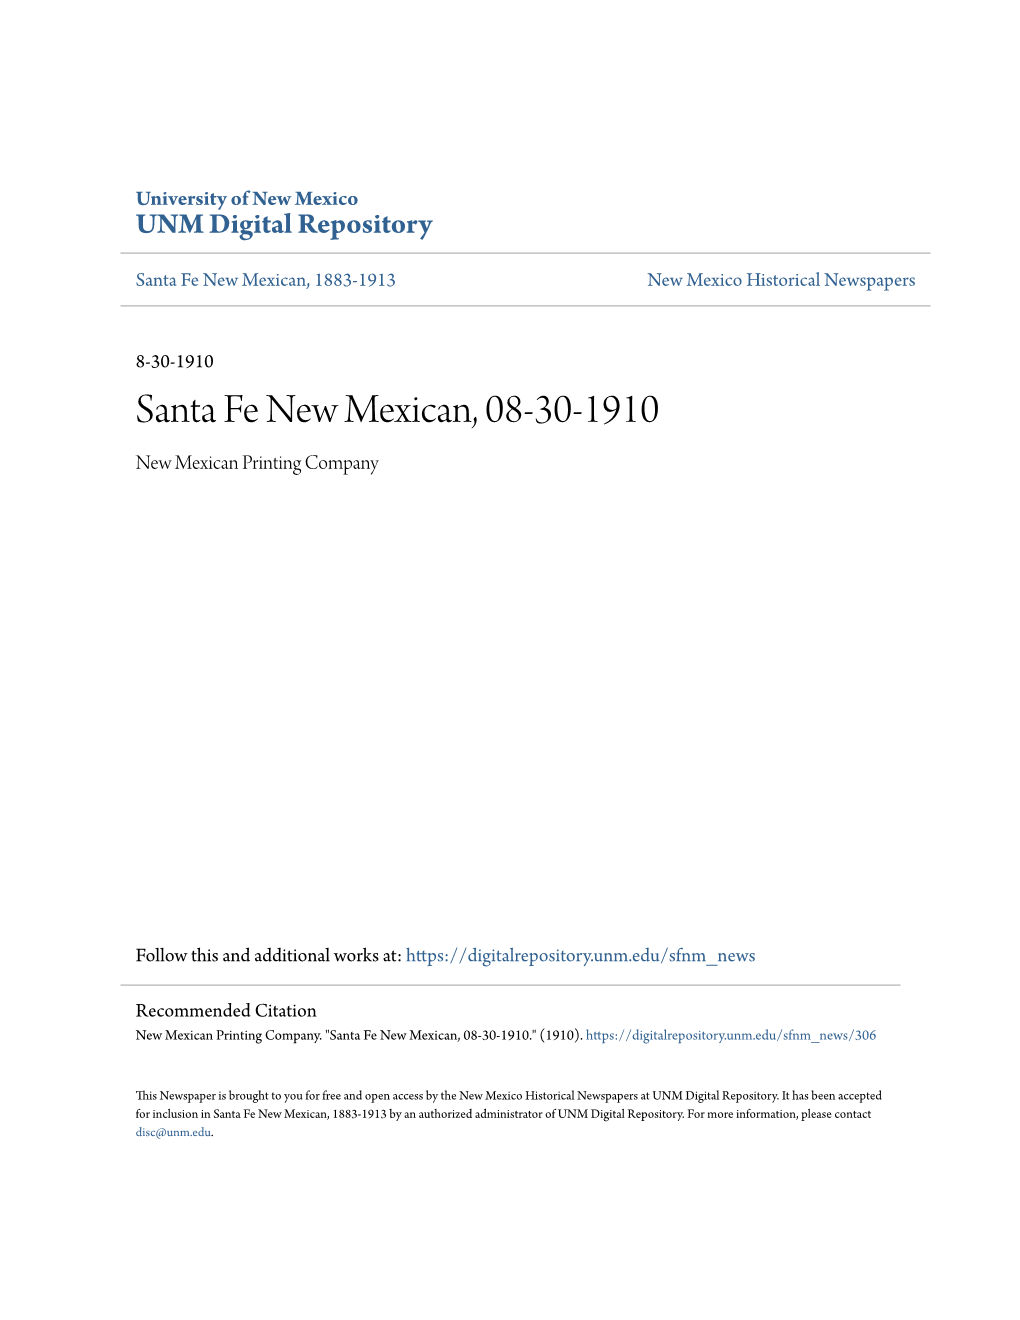 Santa Fe New Mexican, 08-30-1910 New Mexican Printing Company